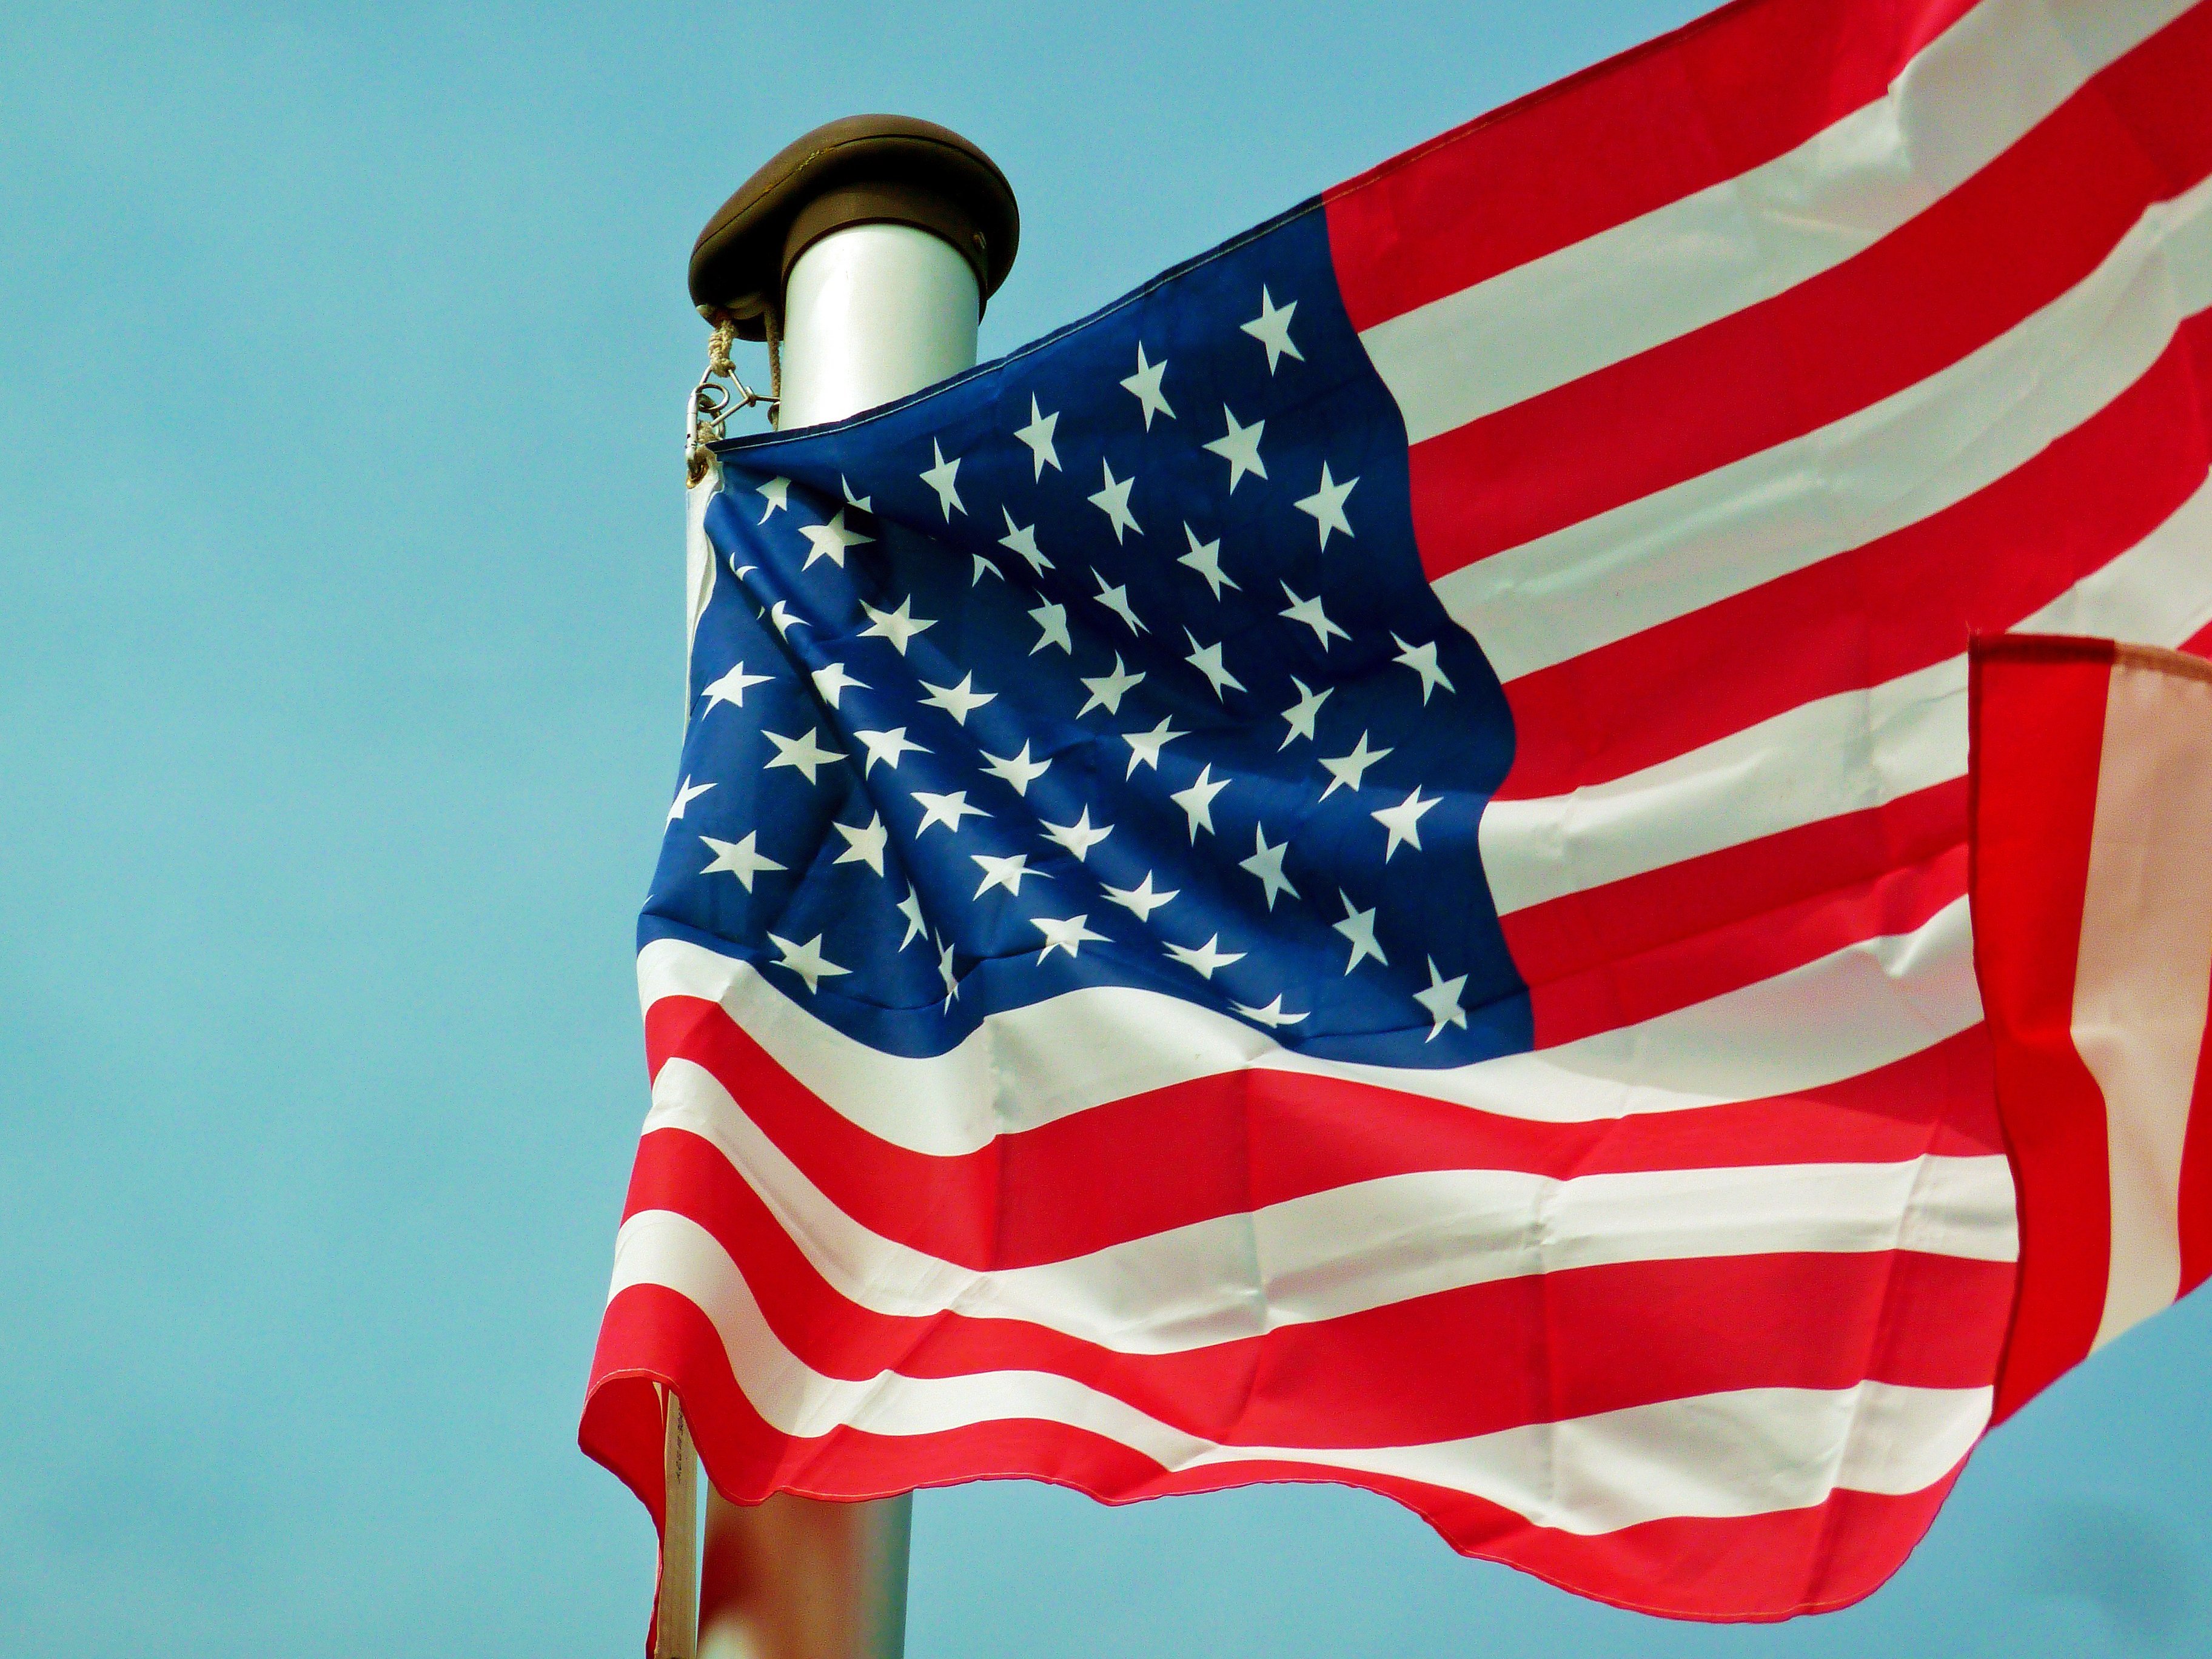 U.S waving flag | Photo: Shutterstock